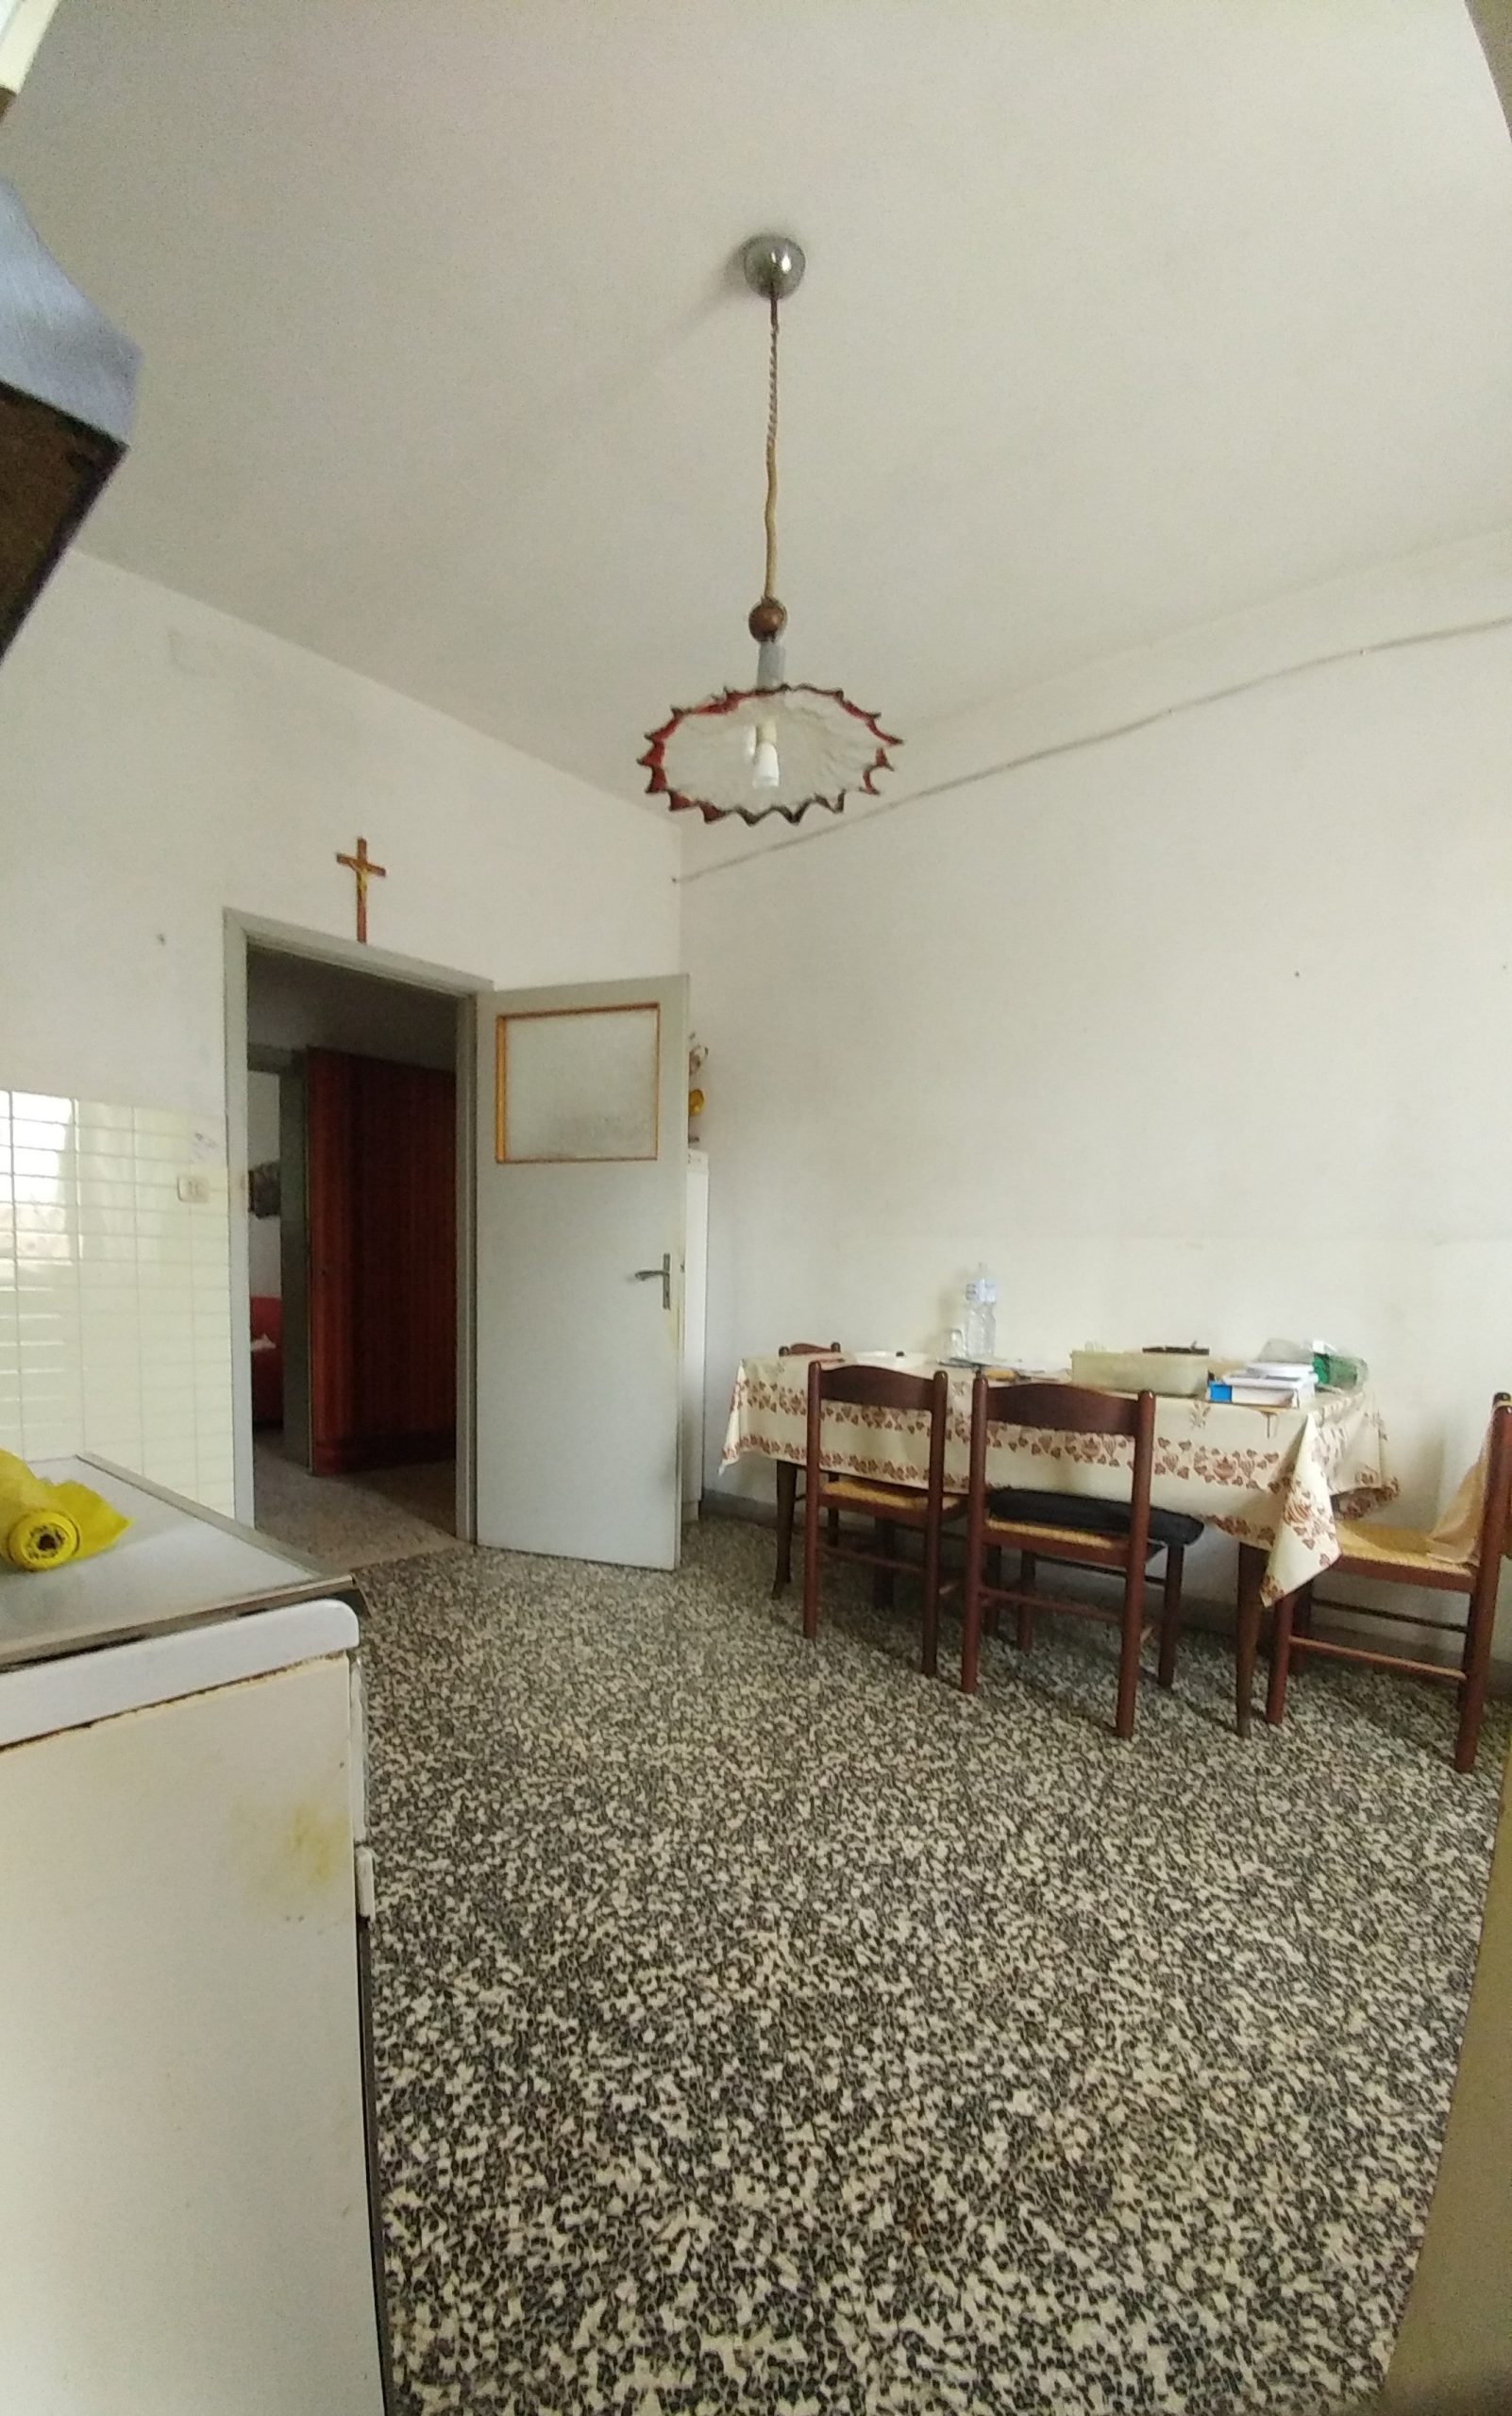 Vendesi appartamento due/tre letto matrimoniali € 60.000 CastelBolognese